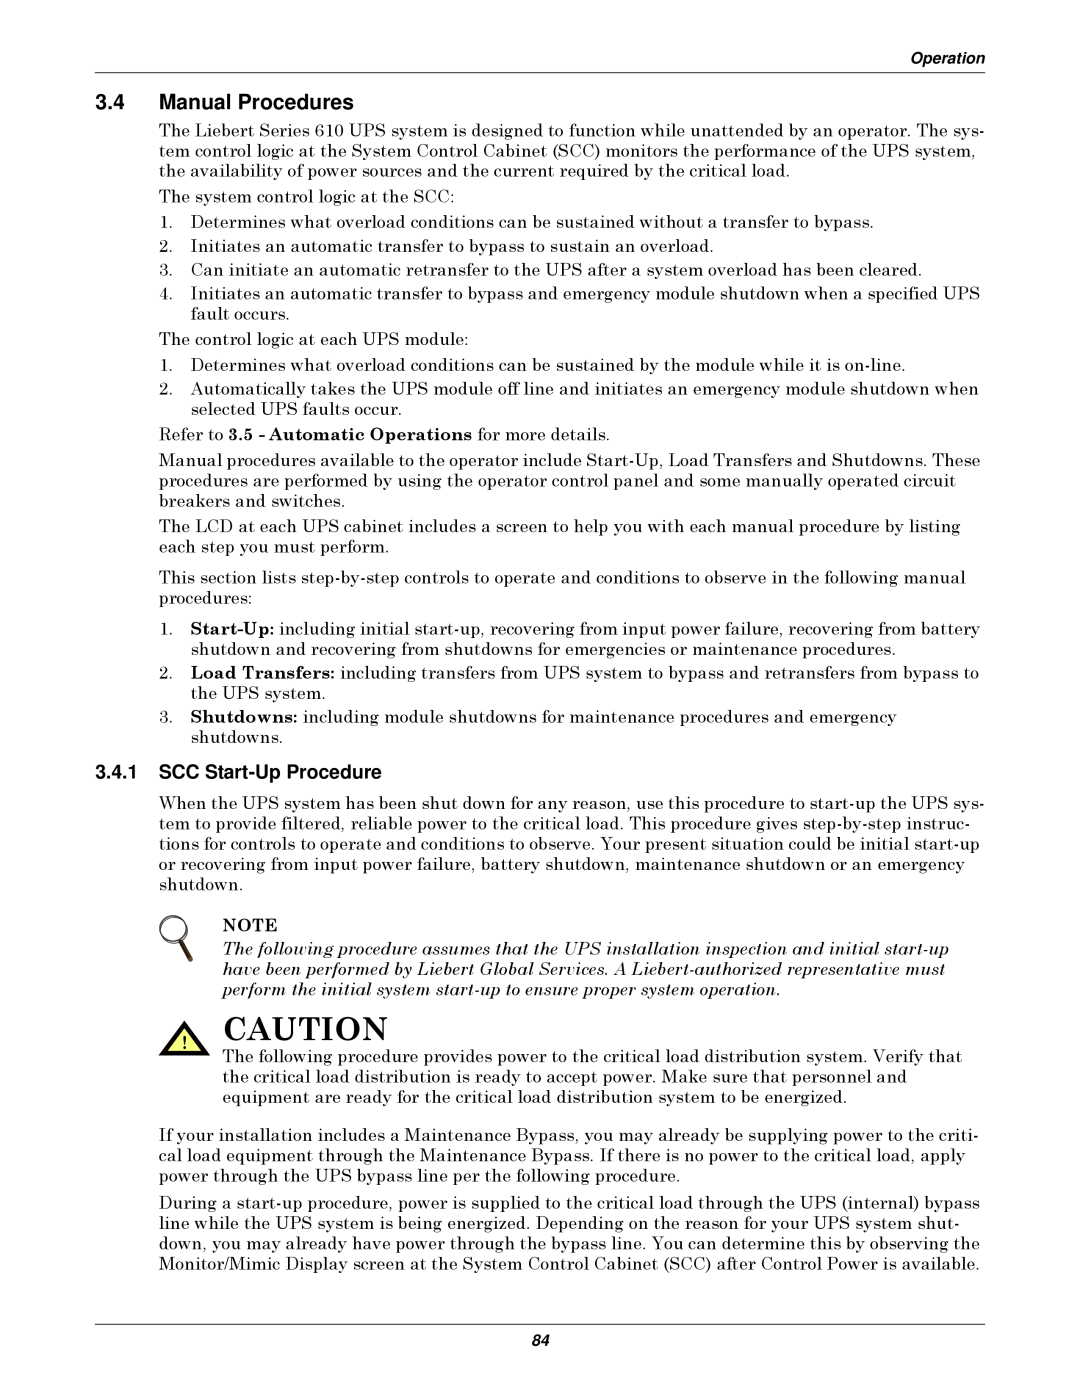 Emerson Series 610 manual Manual Procedures, SCC Start-Up Procedure 